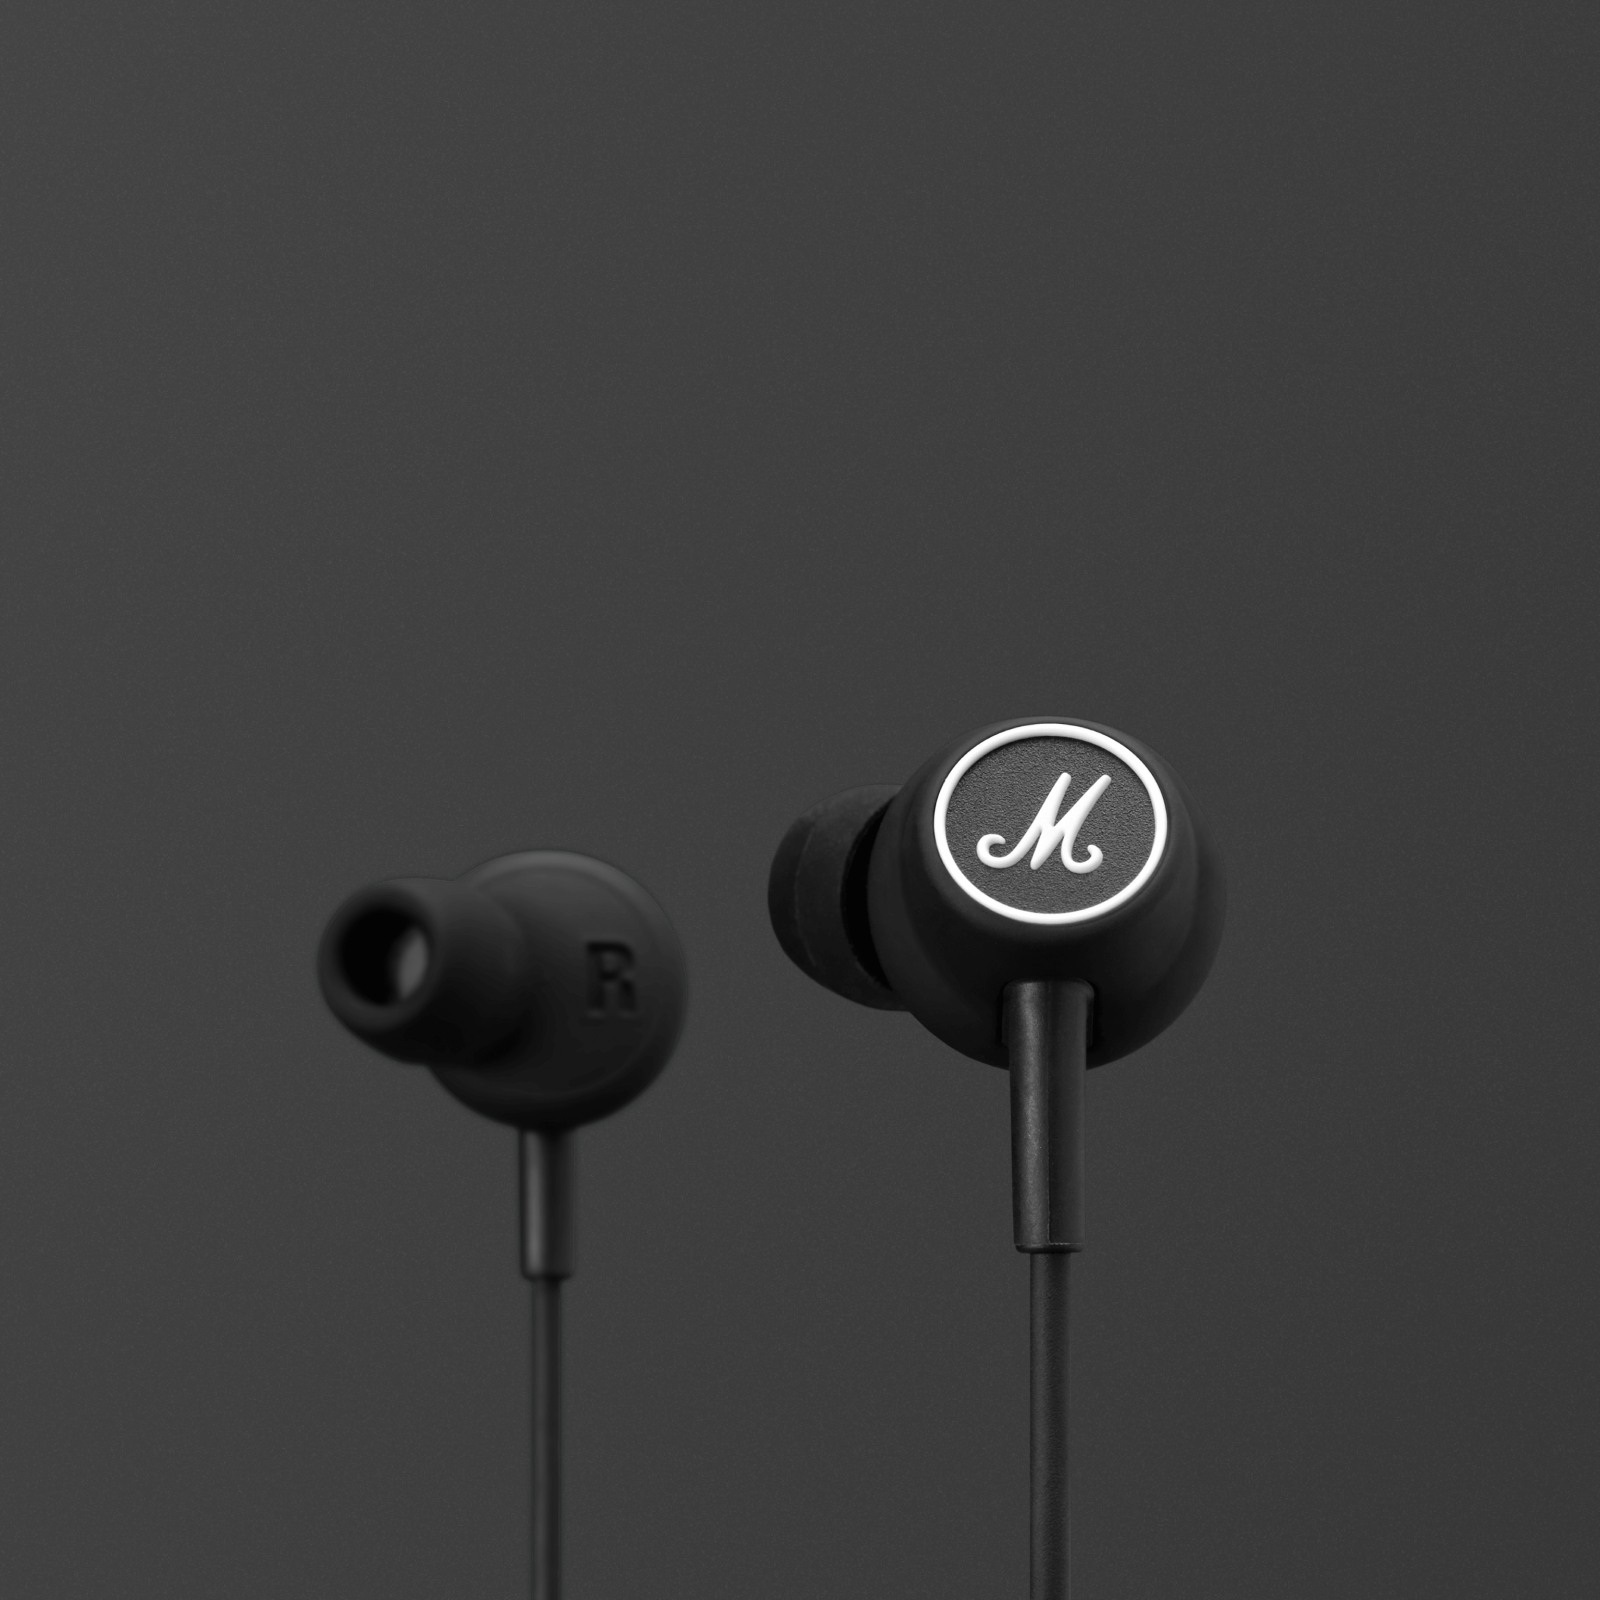 MODE black headphones